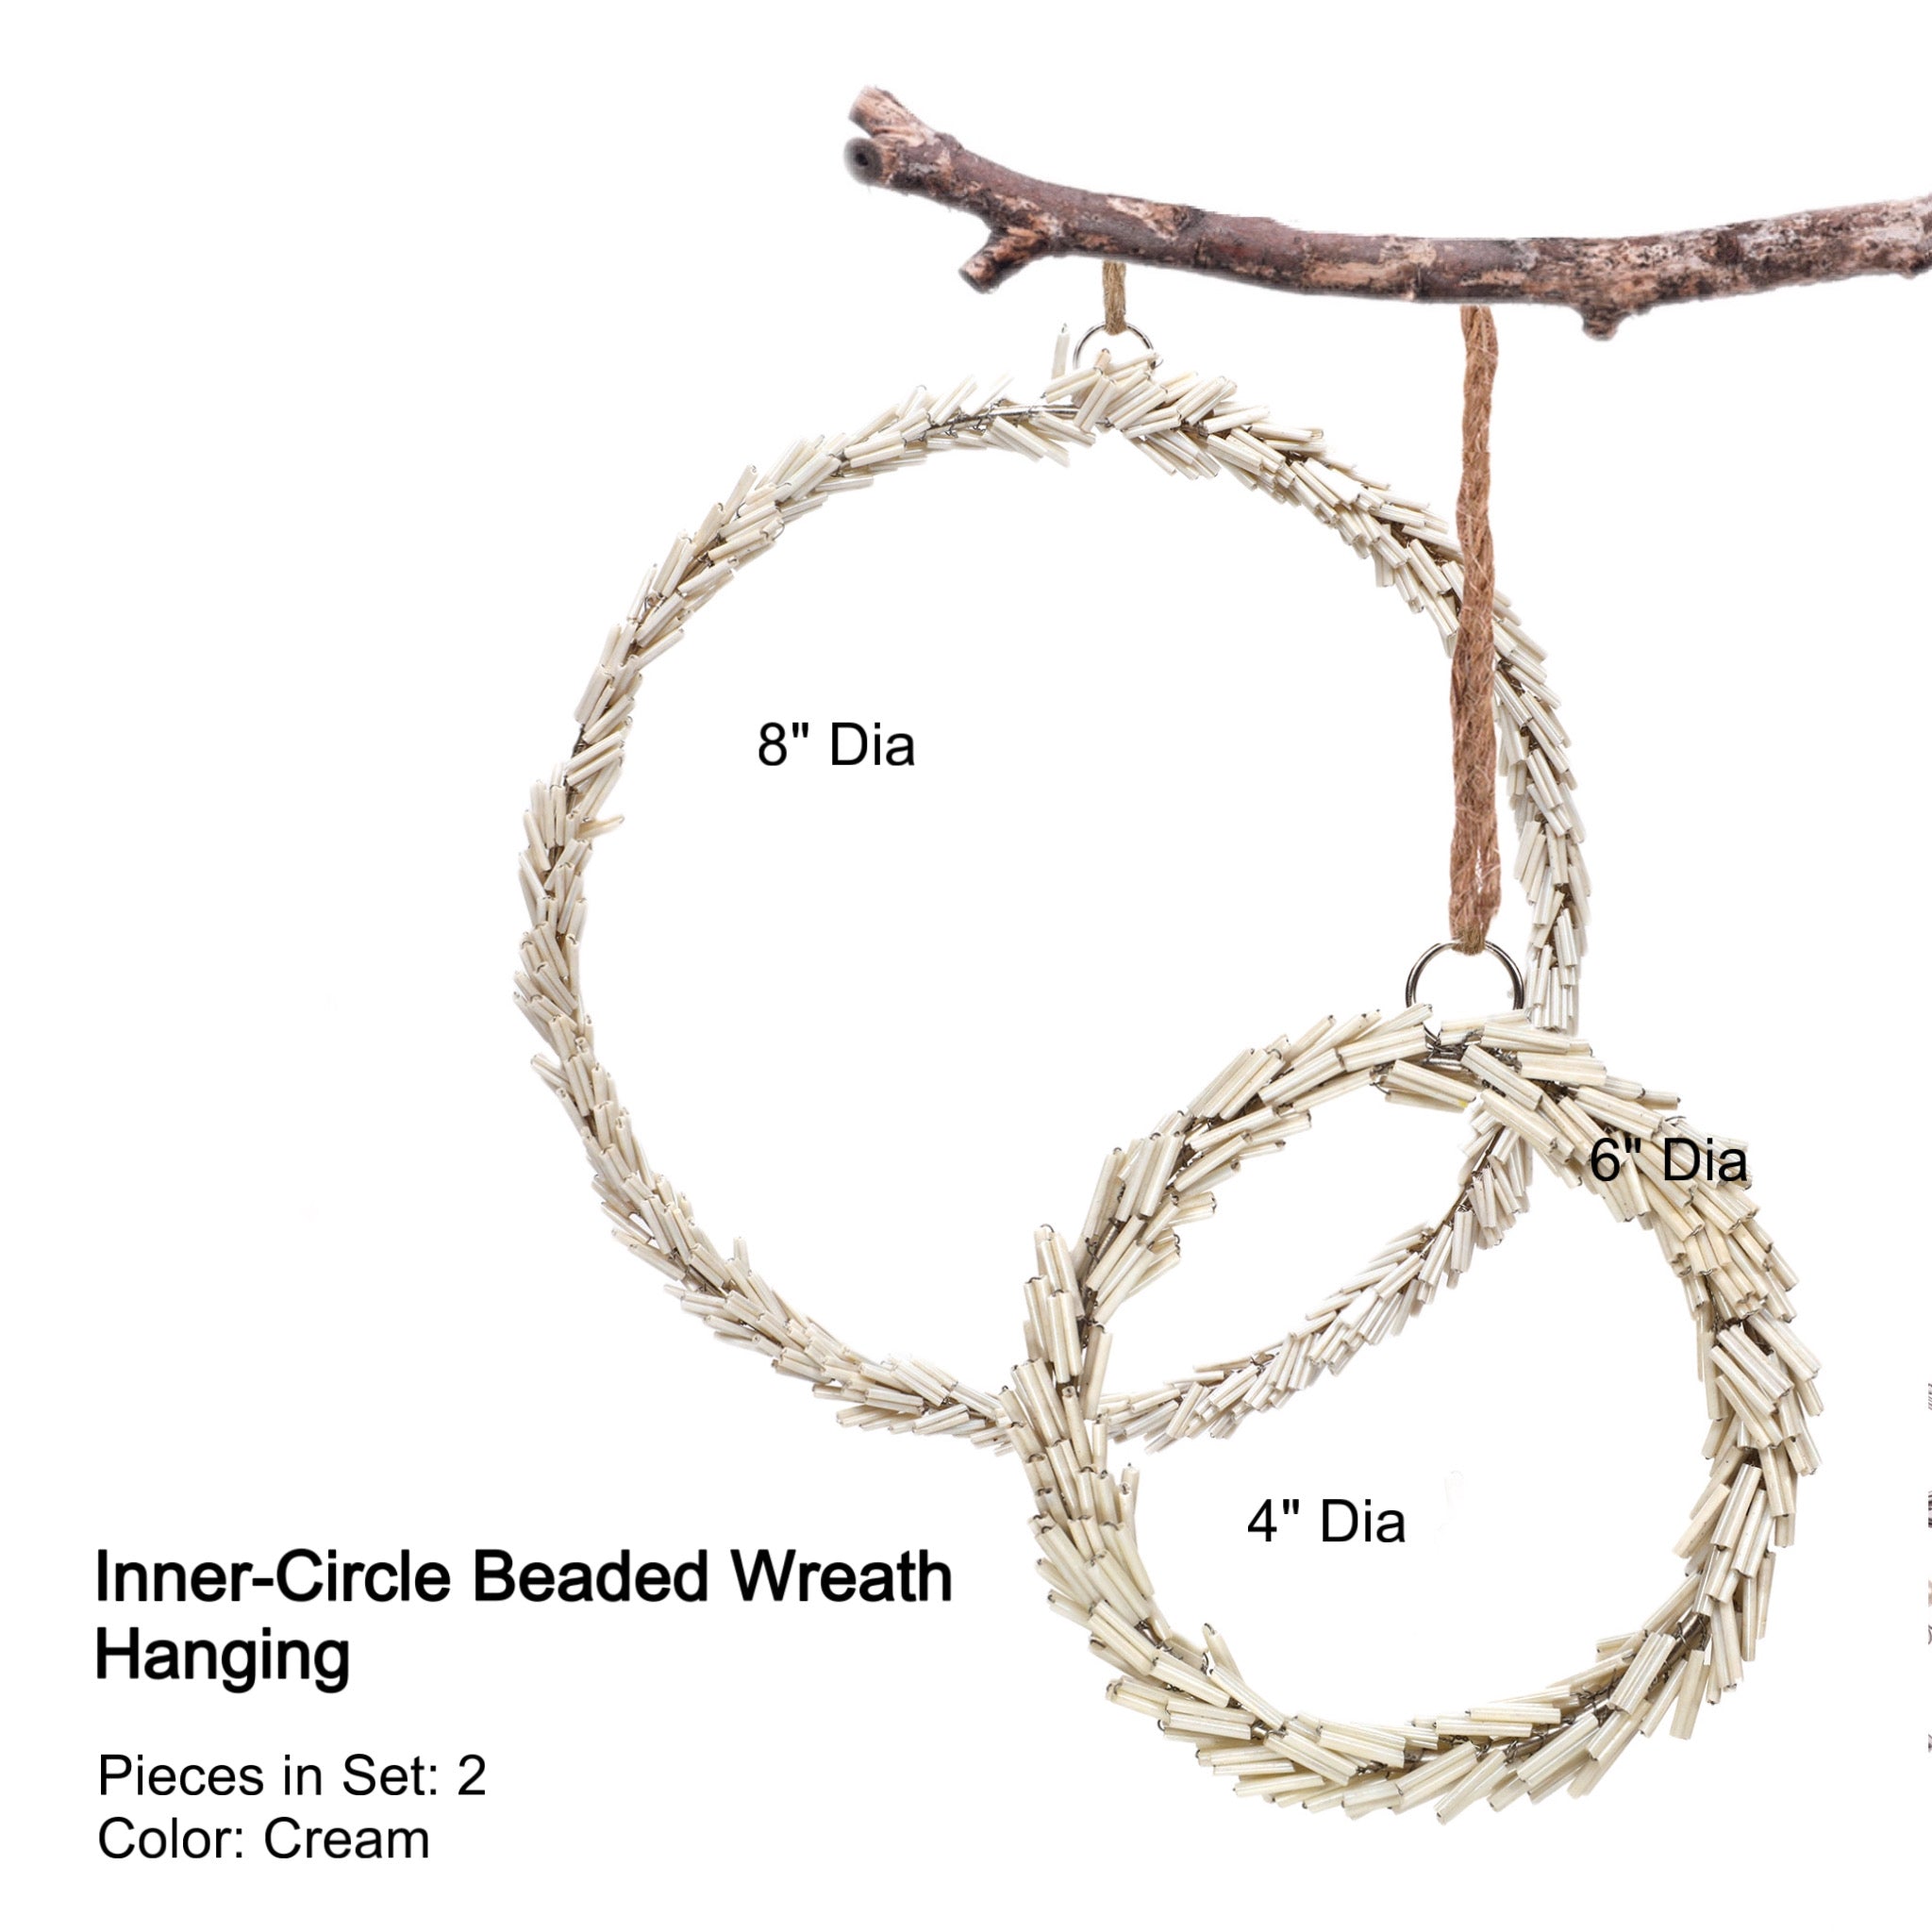 Inner-Circle Beaded Wreath Hanging in Cream, Set of 2